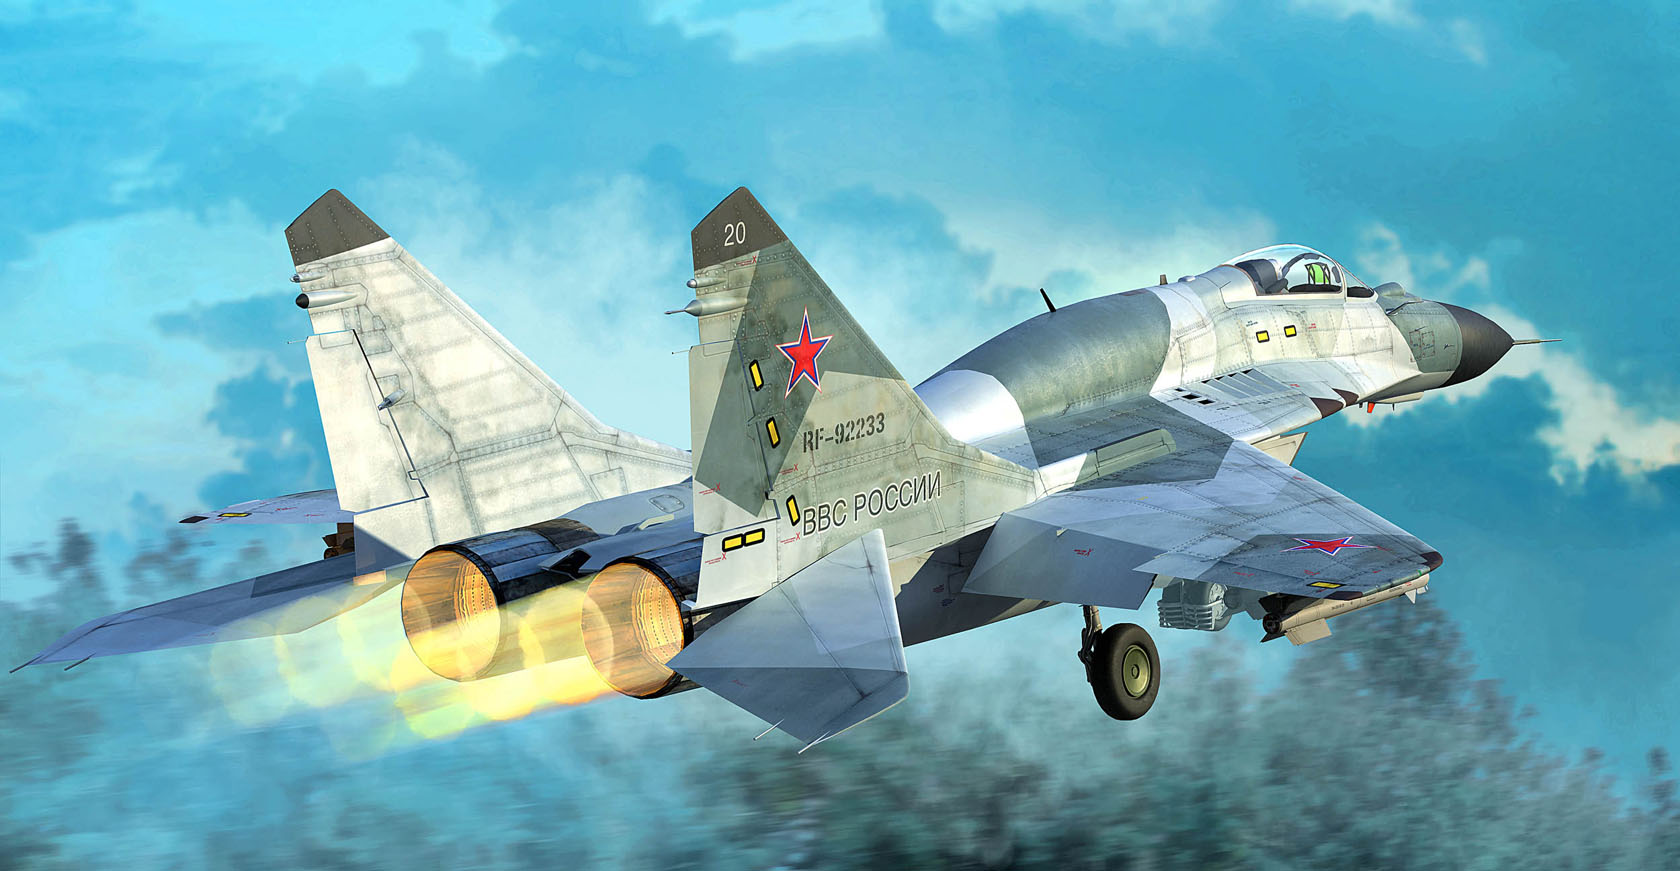 General 1680x871 aircraft flying military military vehicle artwork sky Mikoyan MiG-29 digital art Russian Air Force afterburner shock diamonds